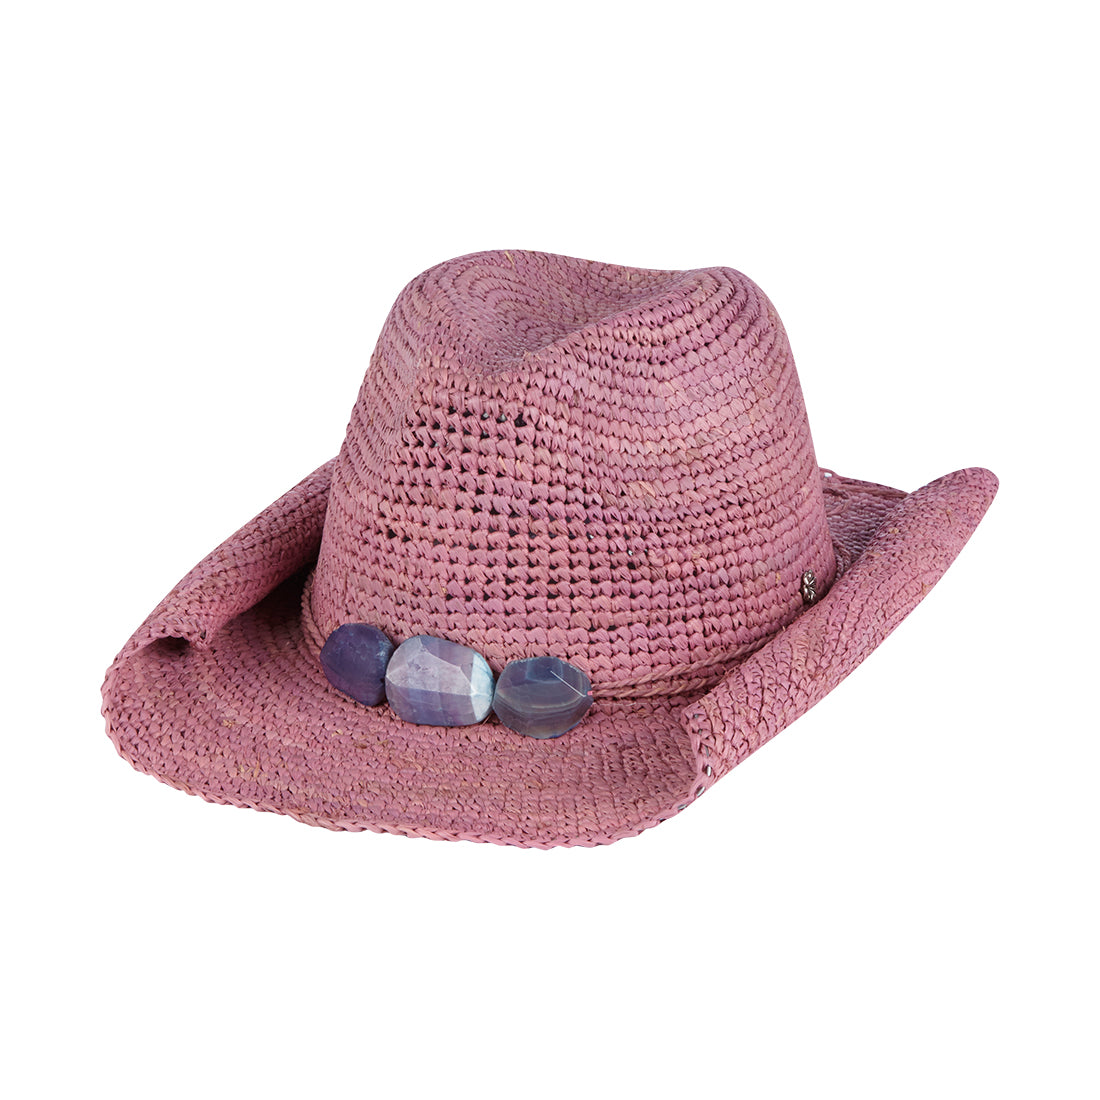  Lilac Crochet Cowboy Hat